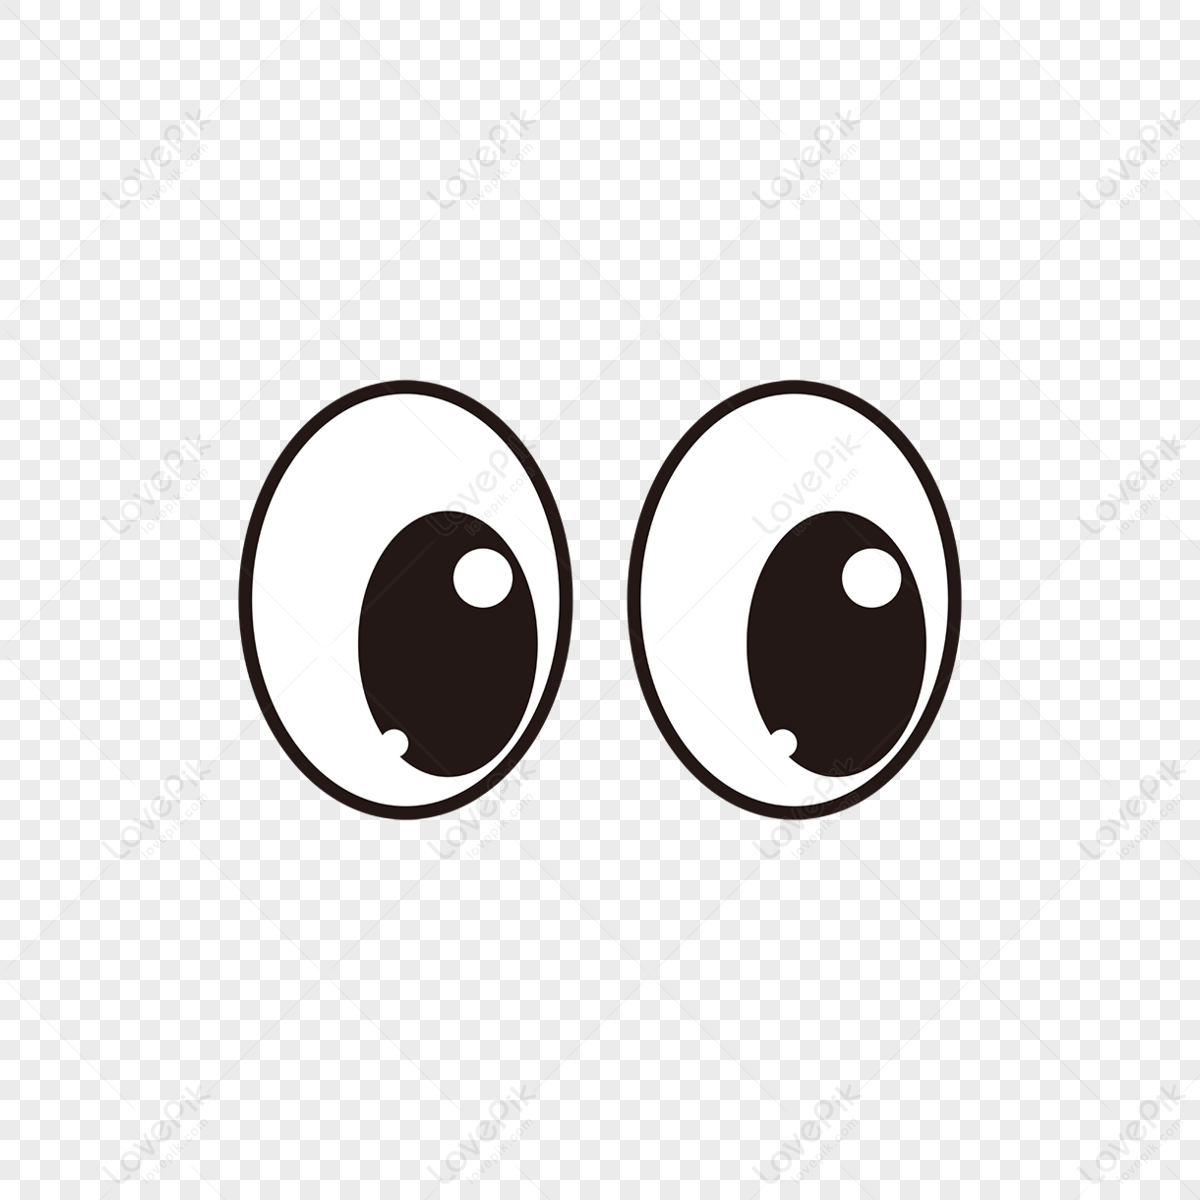 Simple black cartoon character eyes material eyes clipart anime eyes,eyeball,black animal png image free download